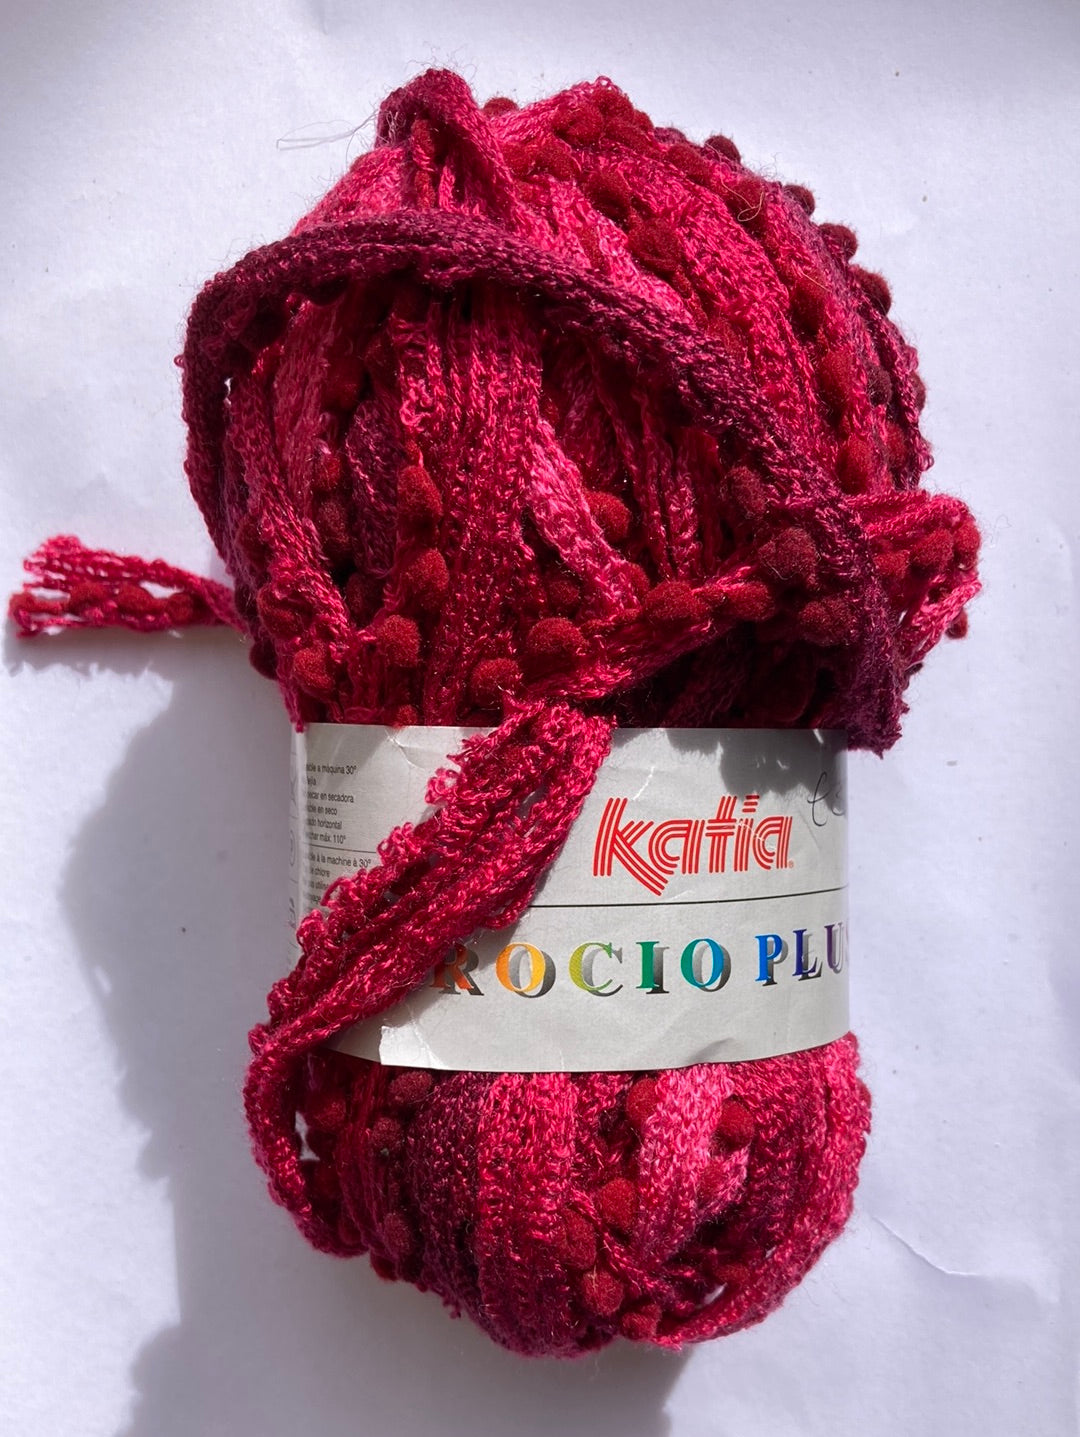 Rocio & Rocio Plus - Katia (Can can / loopy wool with edging)